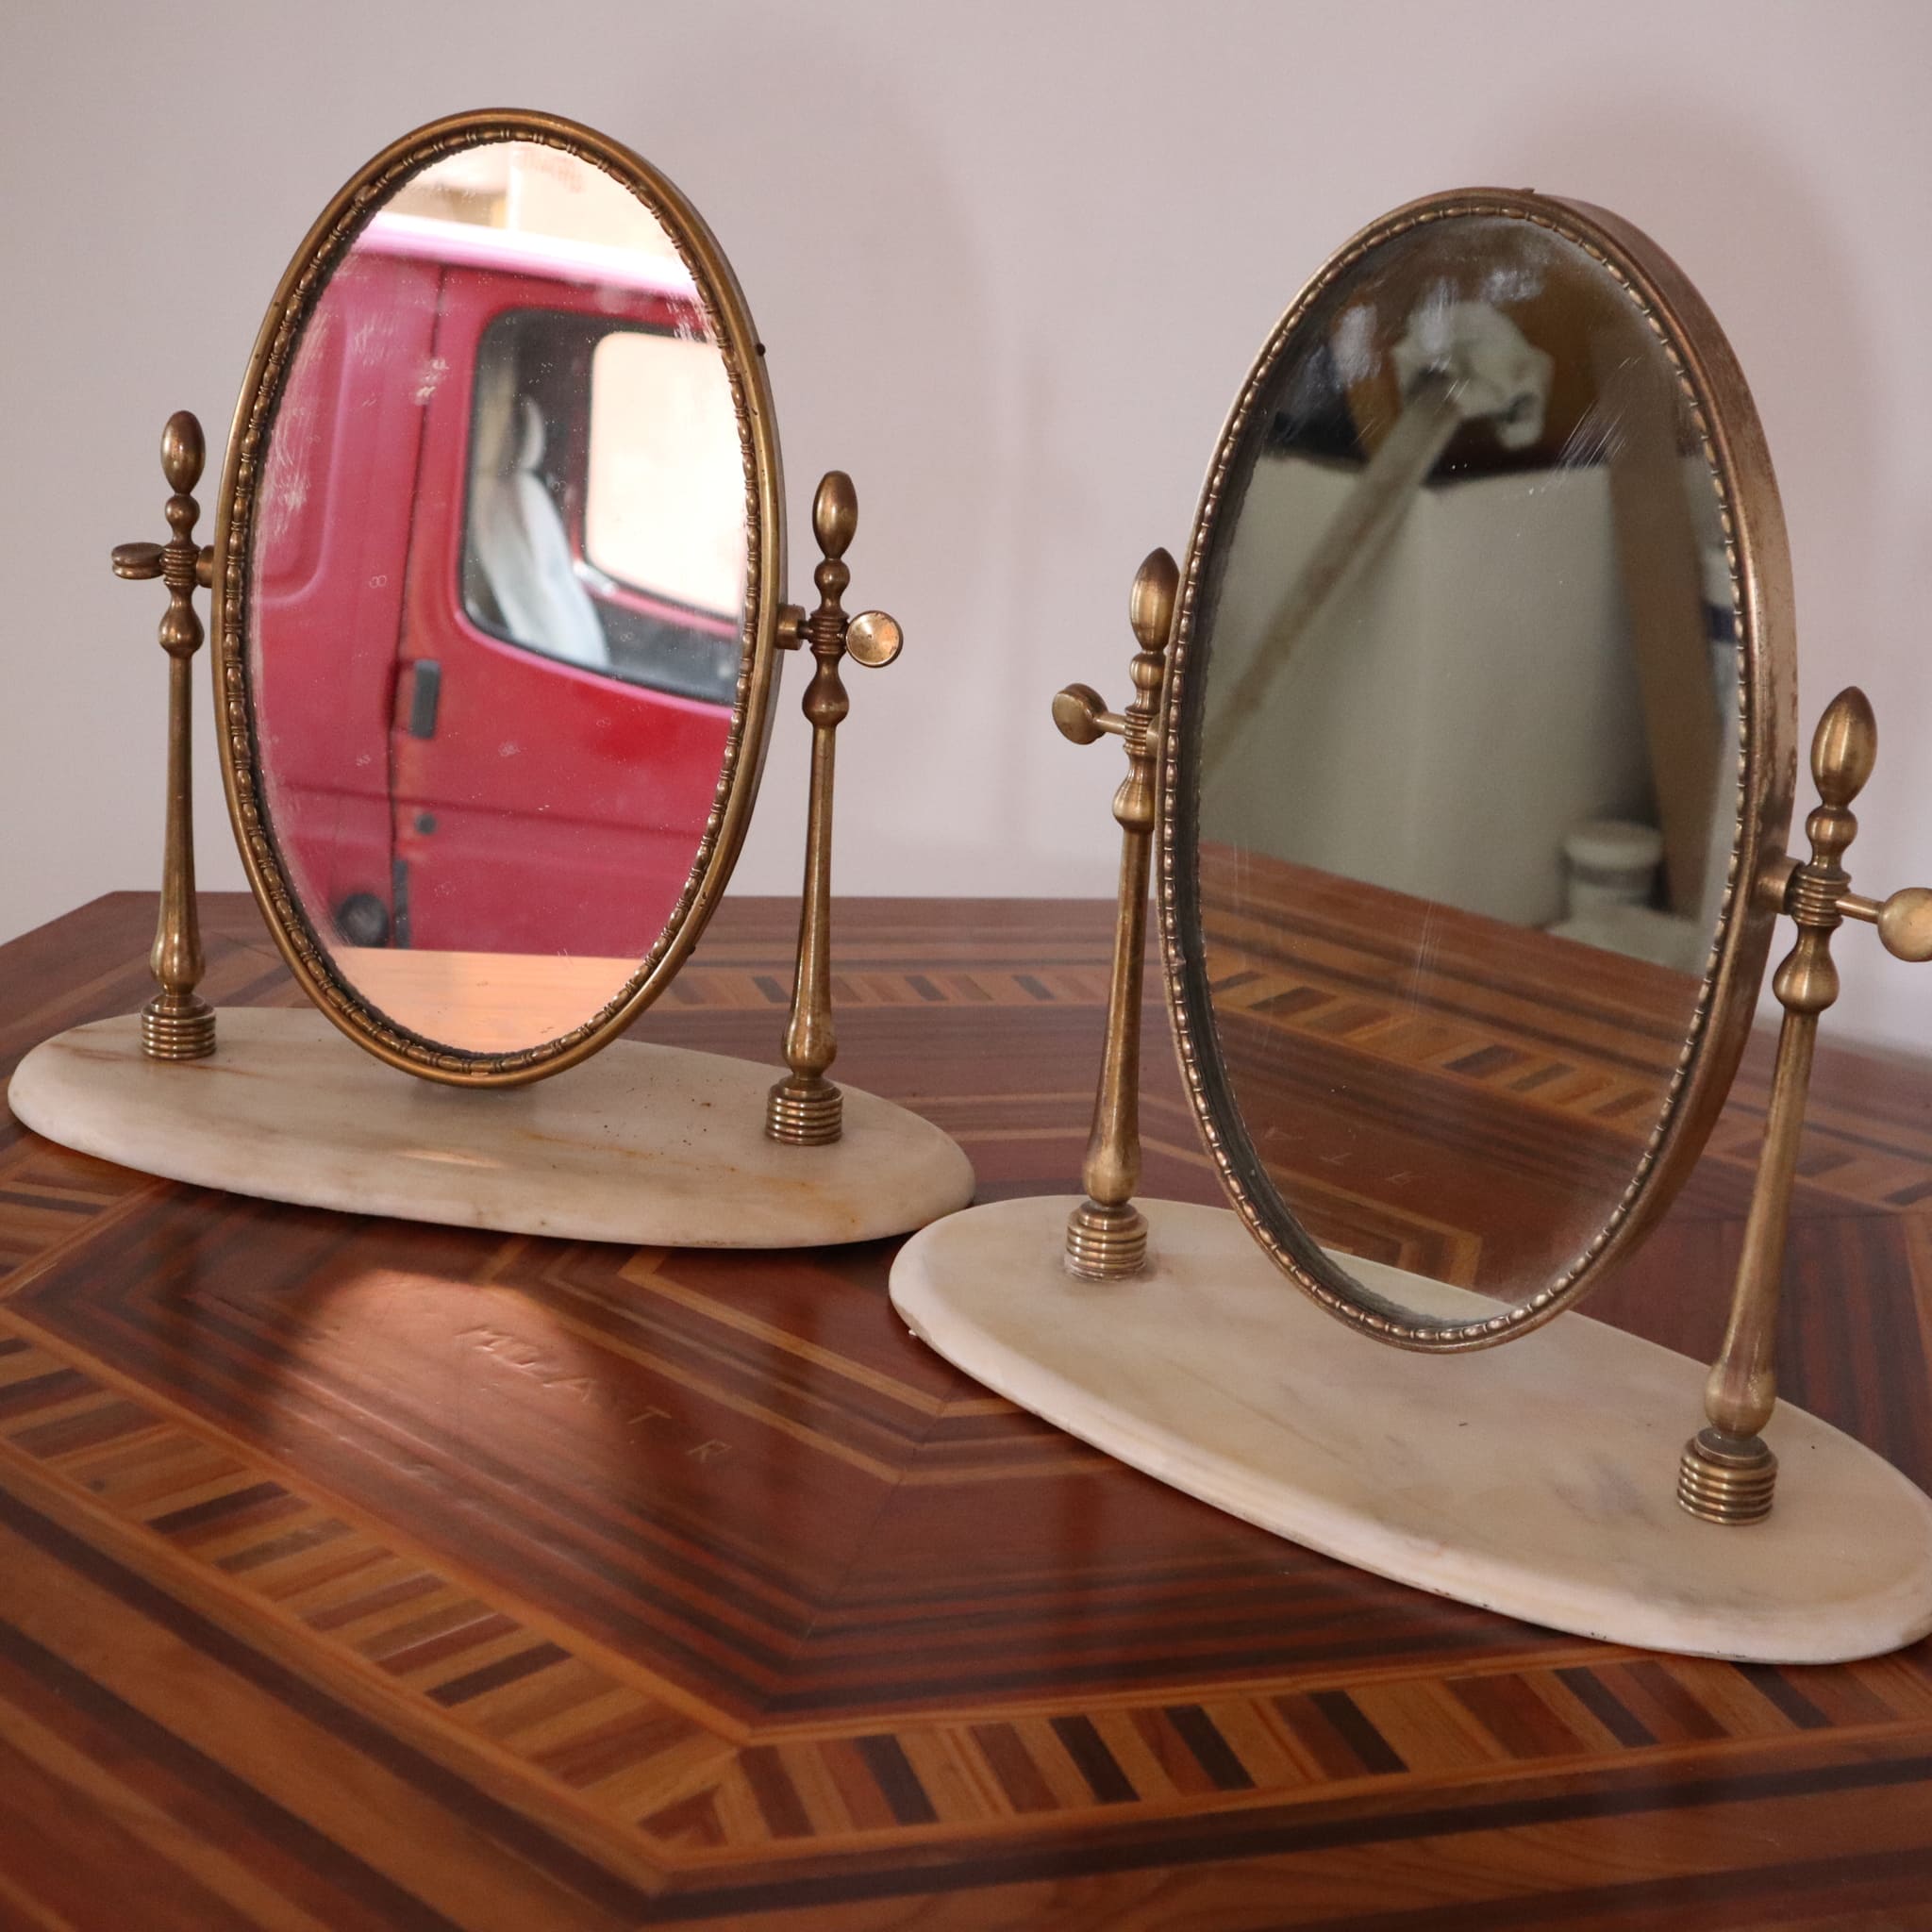 visionidepoca-visioni-depoca-psiche-mirror-brass-marble-original-50s-made-italy-vintage-modern-antiques-furniture-tilting-2